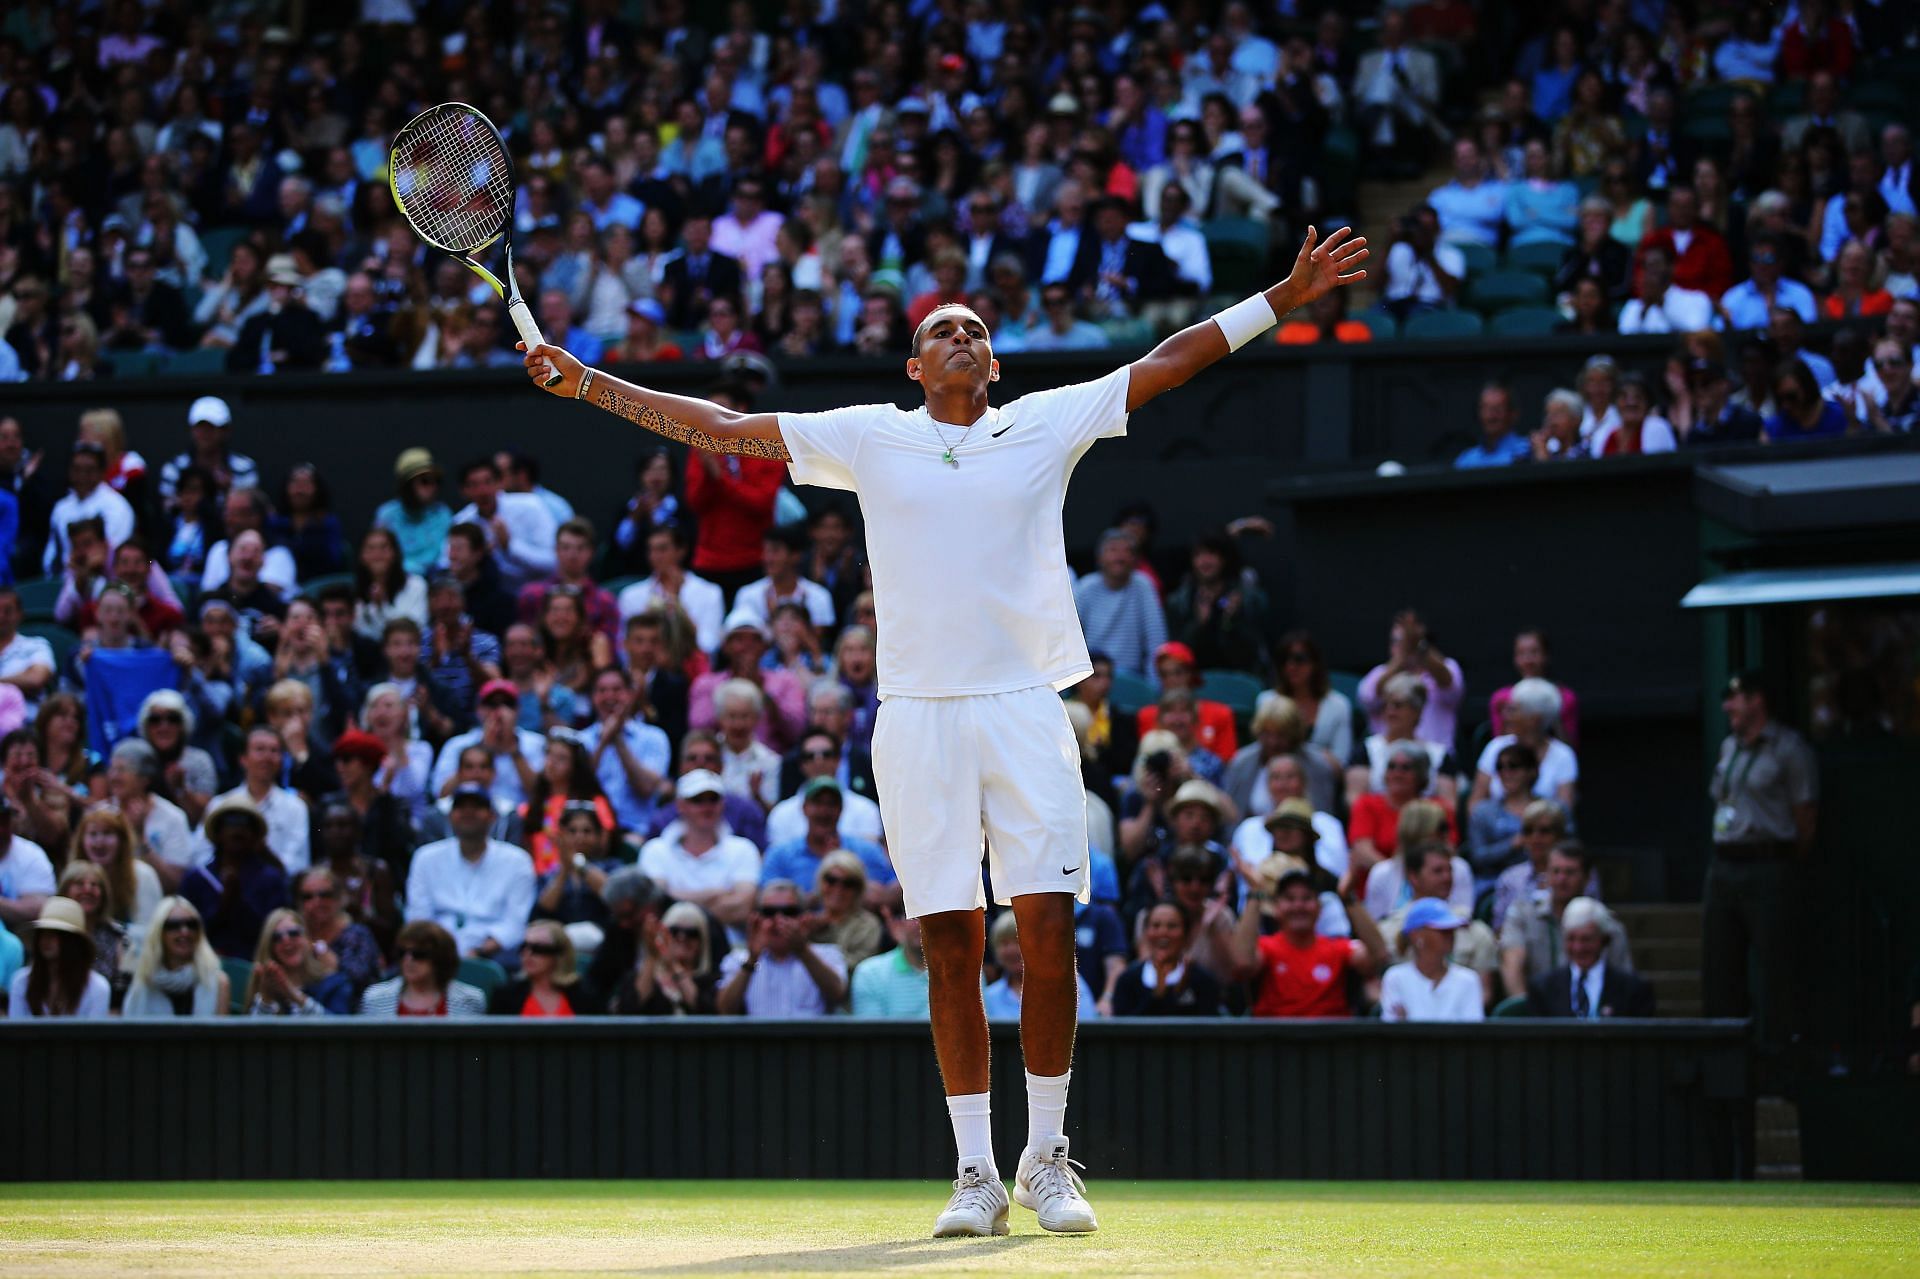 Nick Kyrgios during his match with Rafael Nadal at the 2014 Wimbledon Championships